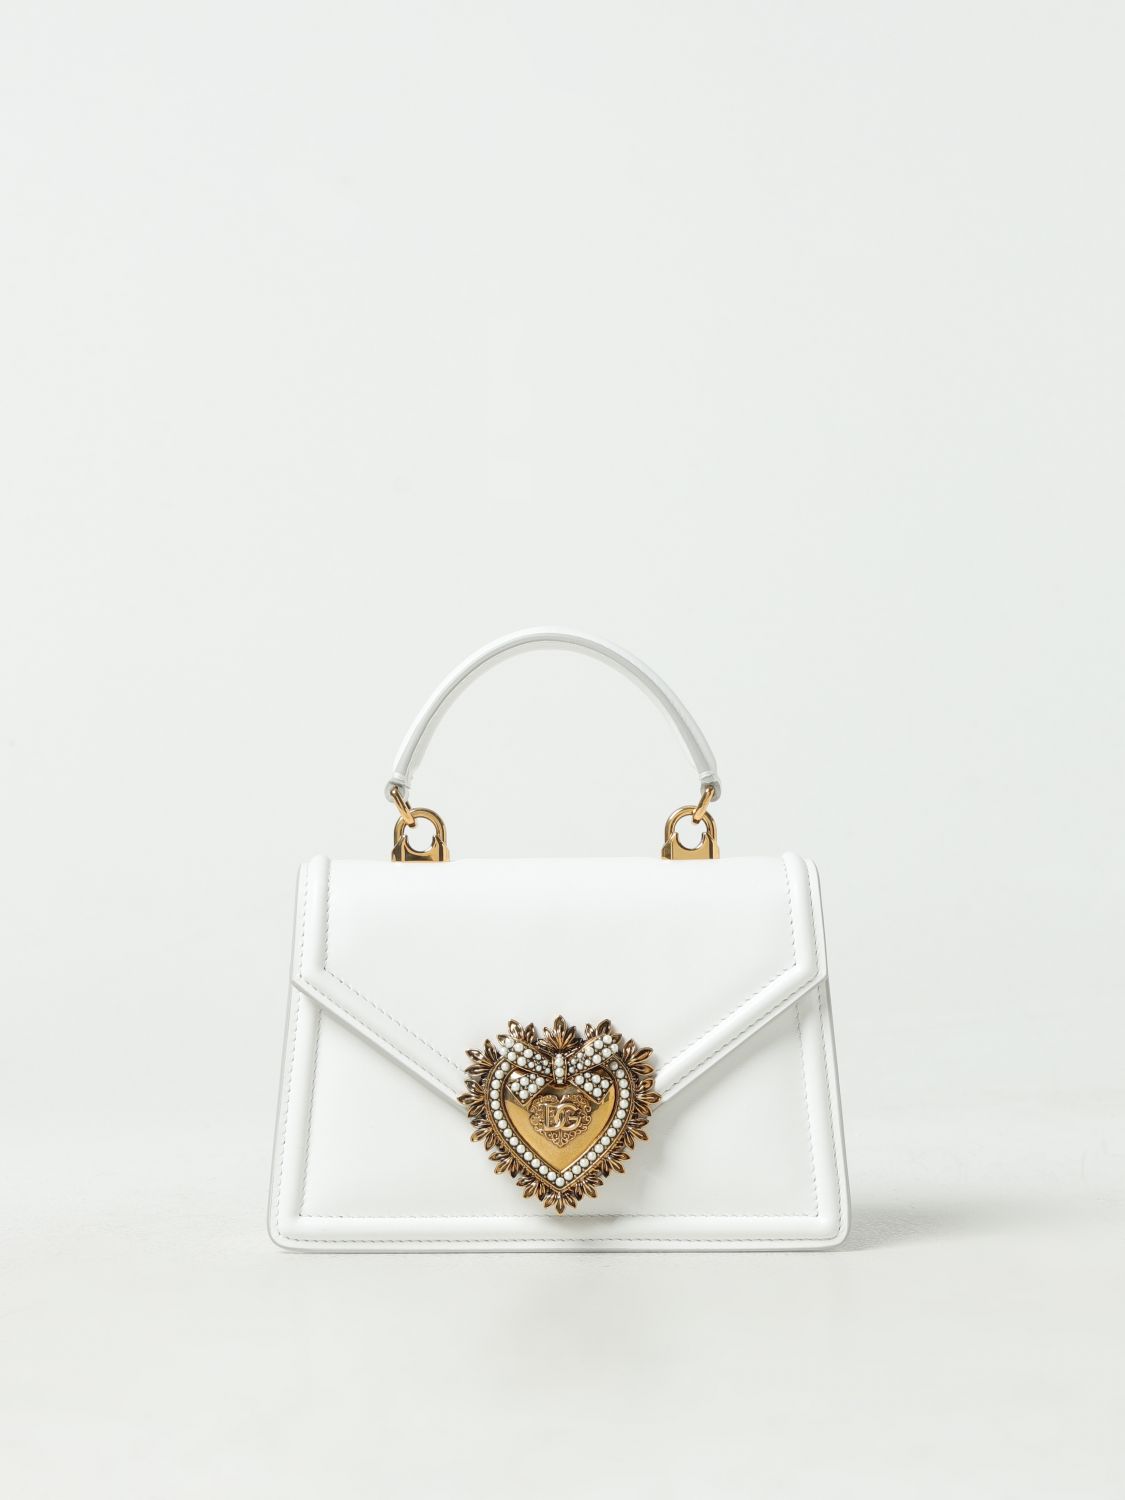 Dolce & Gabbana Devotion Bag In Leather In 白色 1